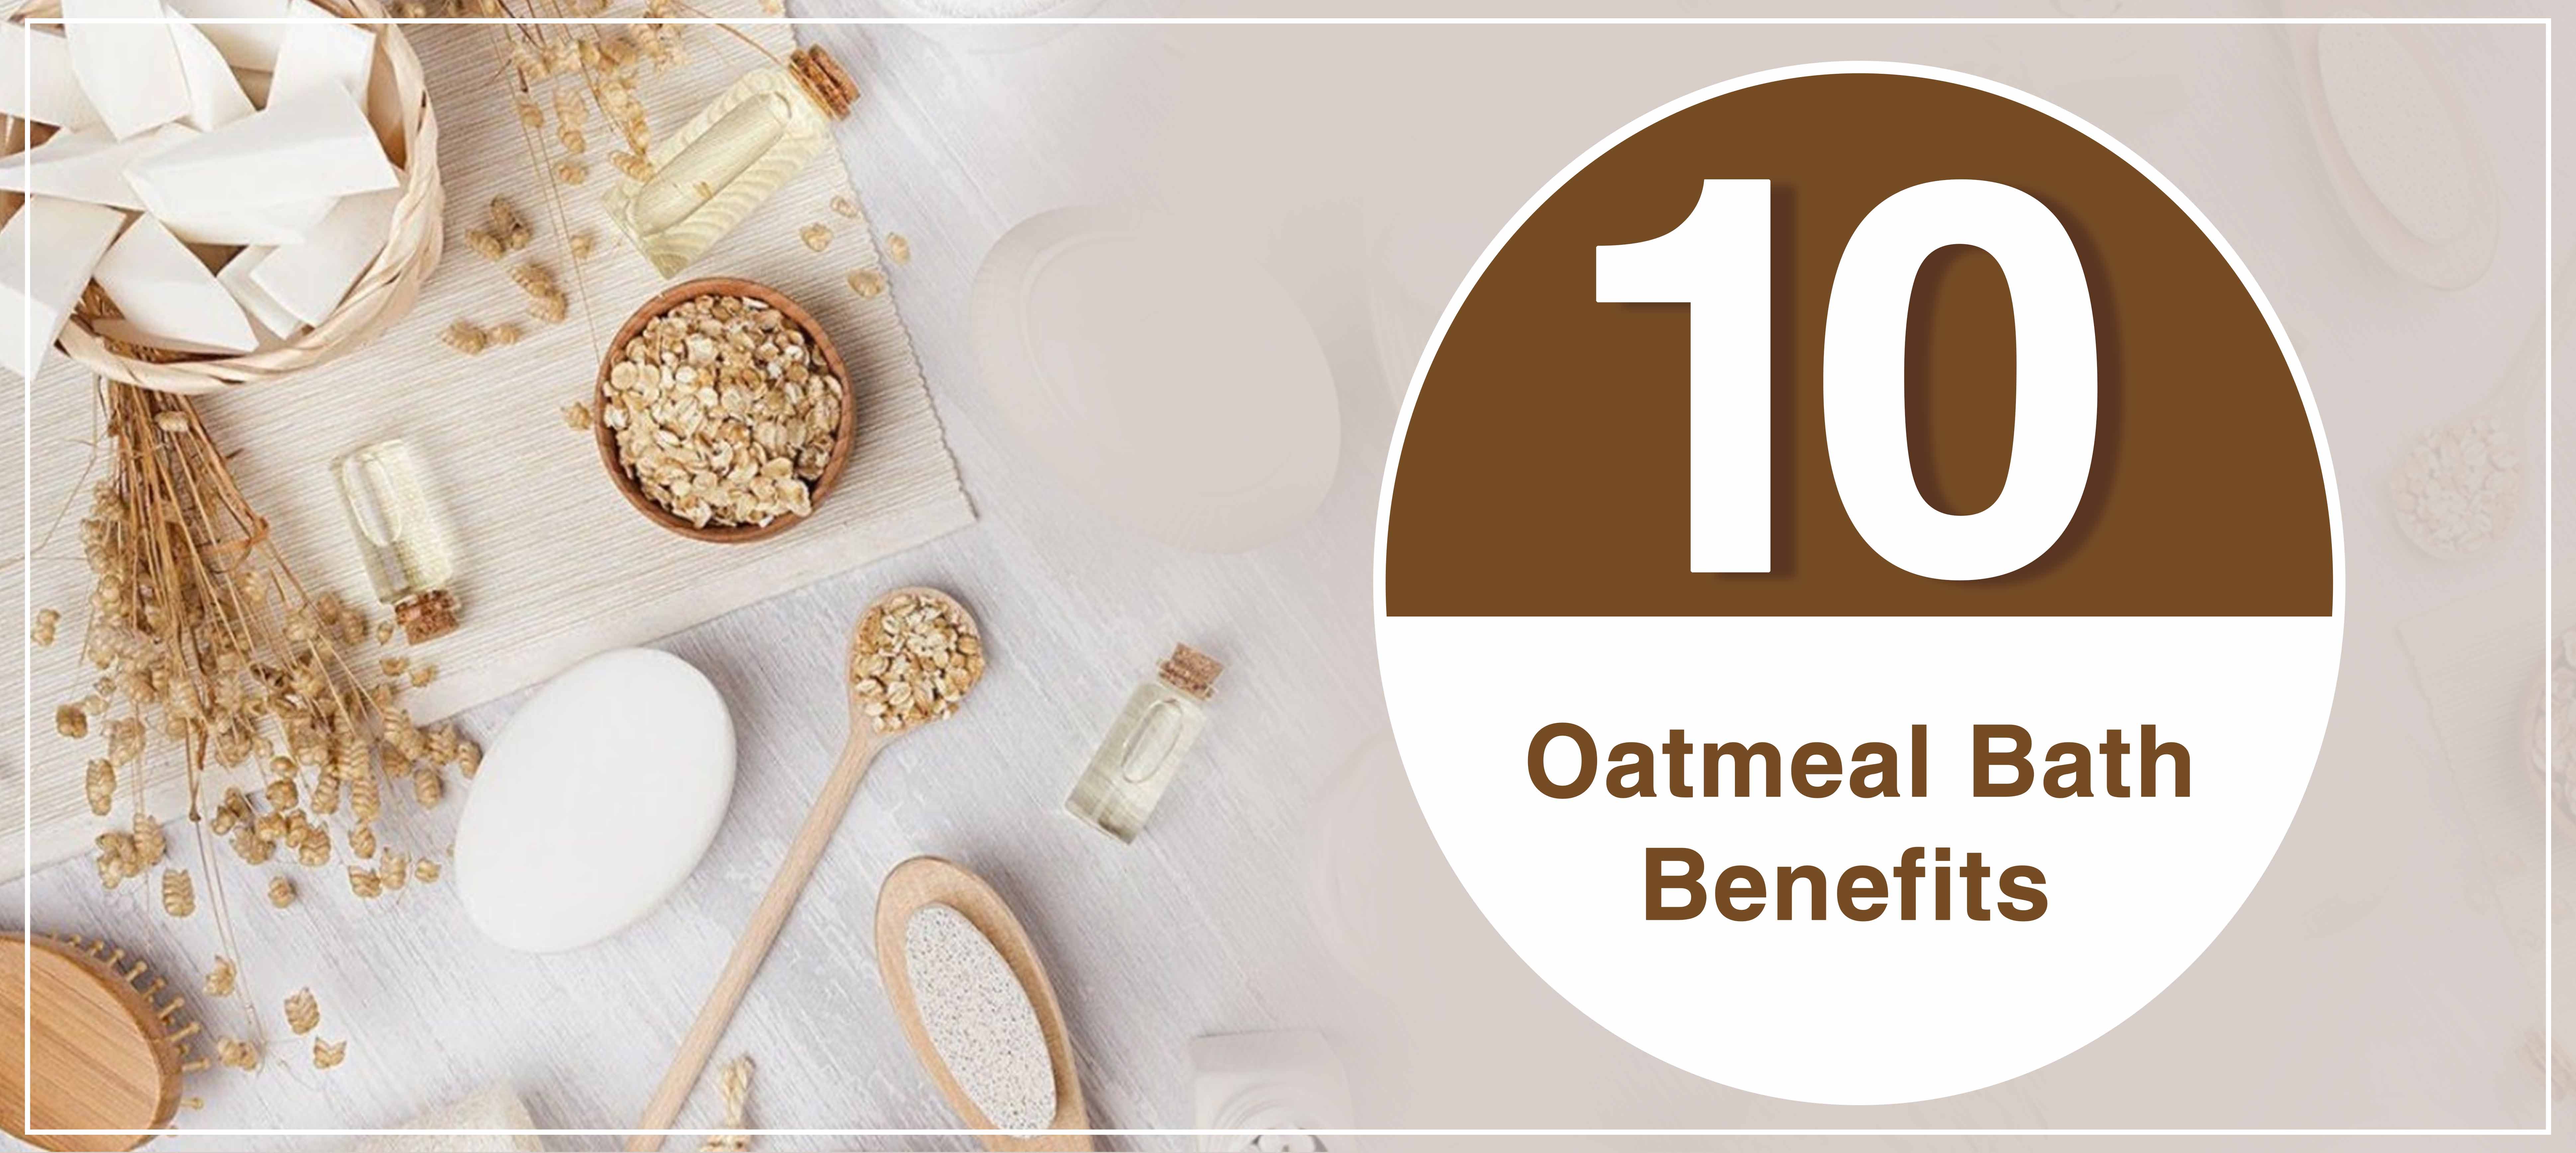 Oatmeal Bath Benefits